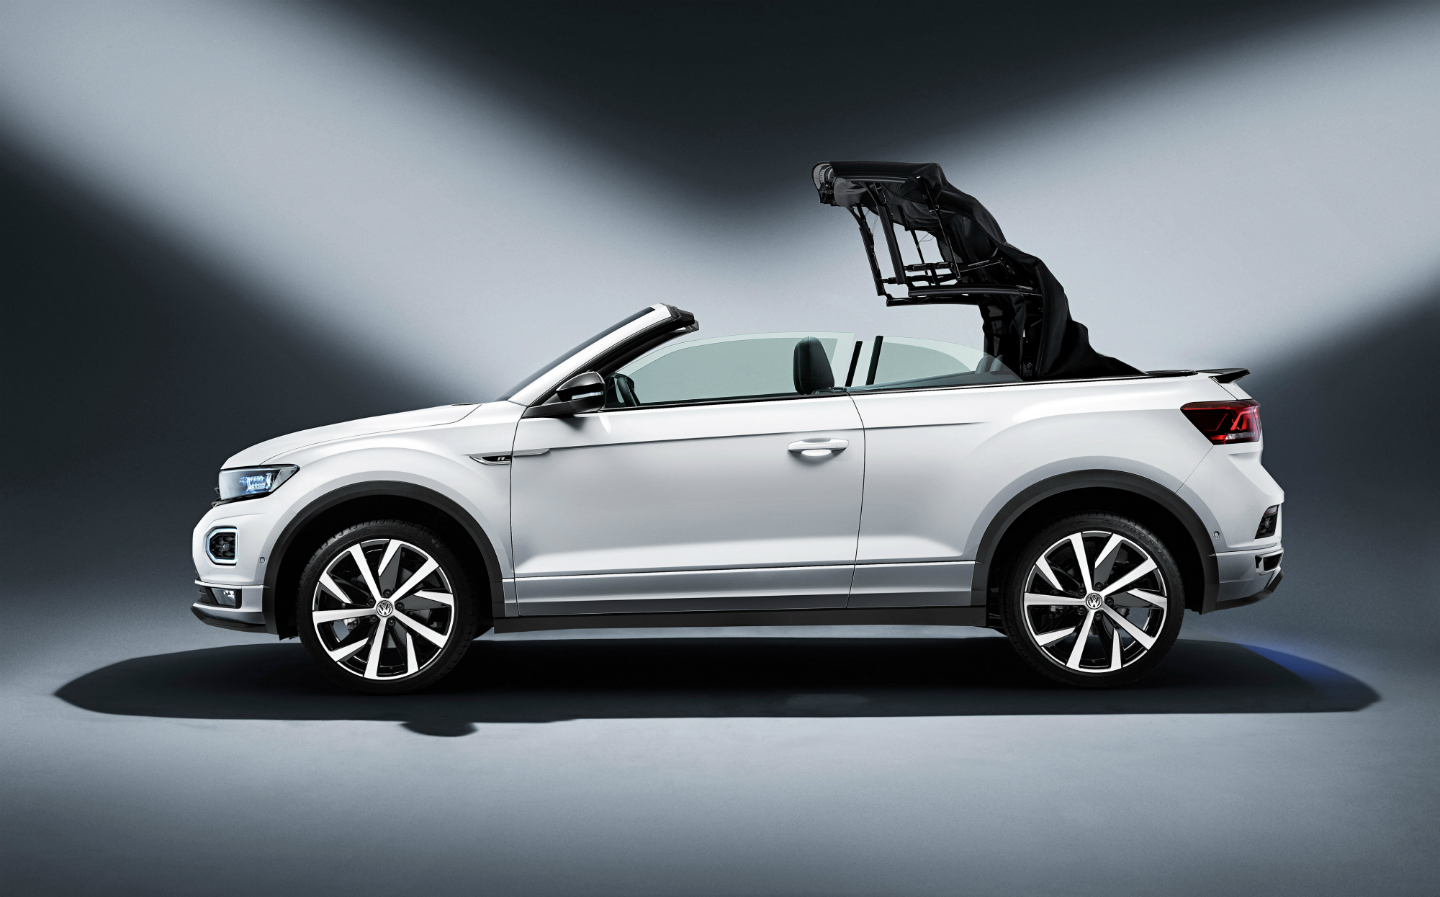 2020 Volkswagen T Roc Cabriolet Reveal 04 Ποια μοντέλα κάνουν πρεμιέρα στην έκθεση Αυτοκίνηση